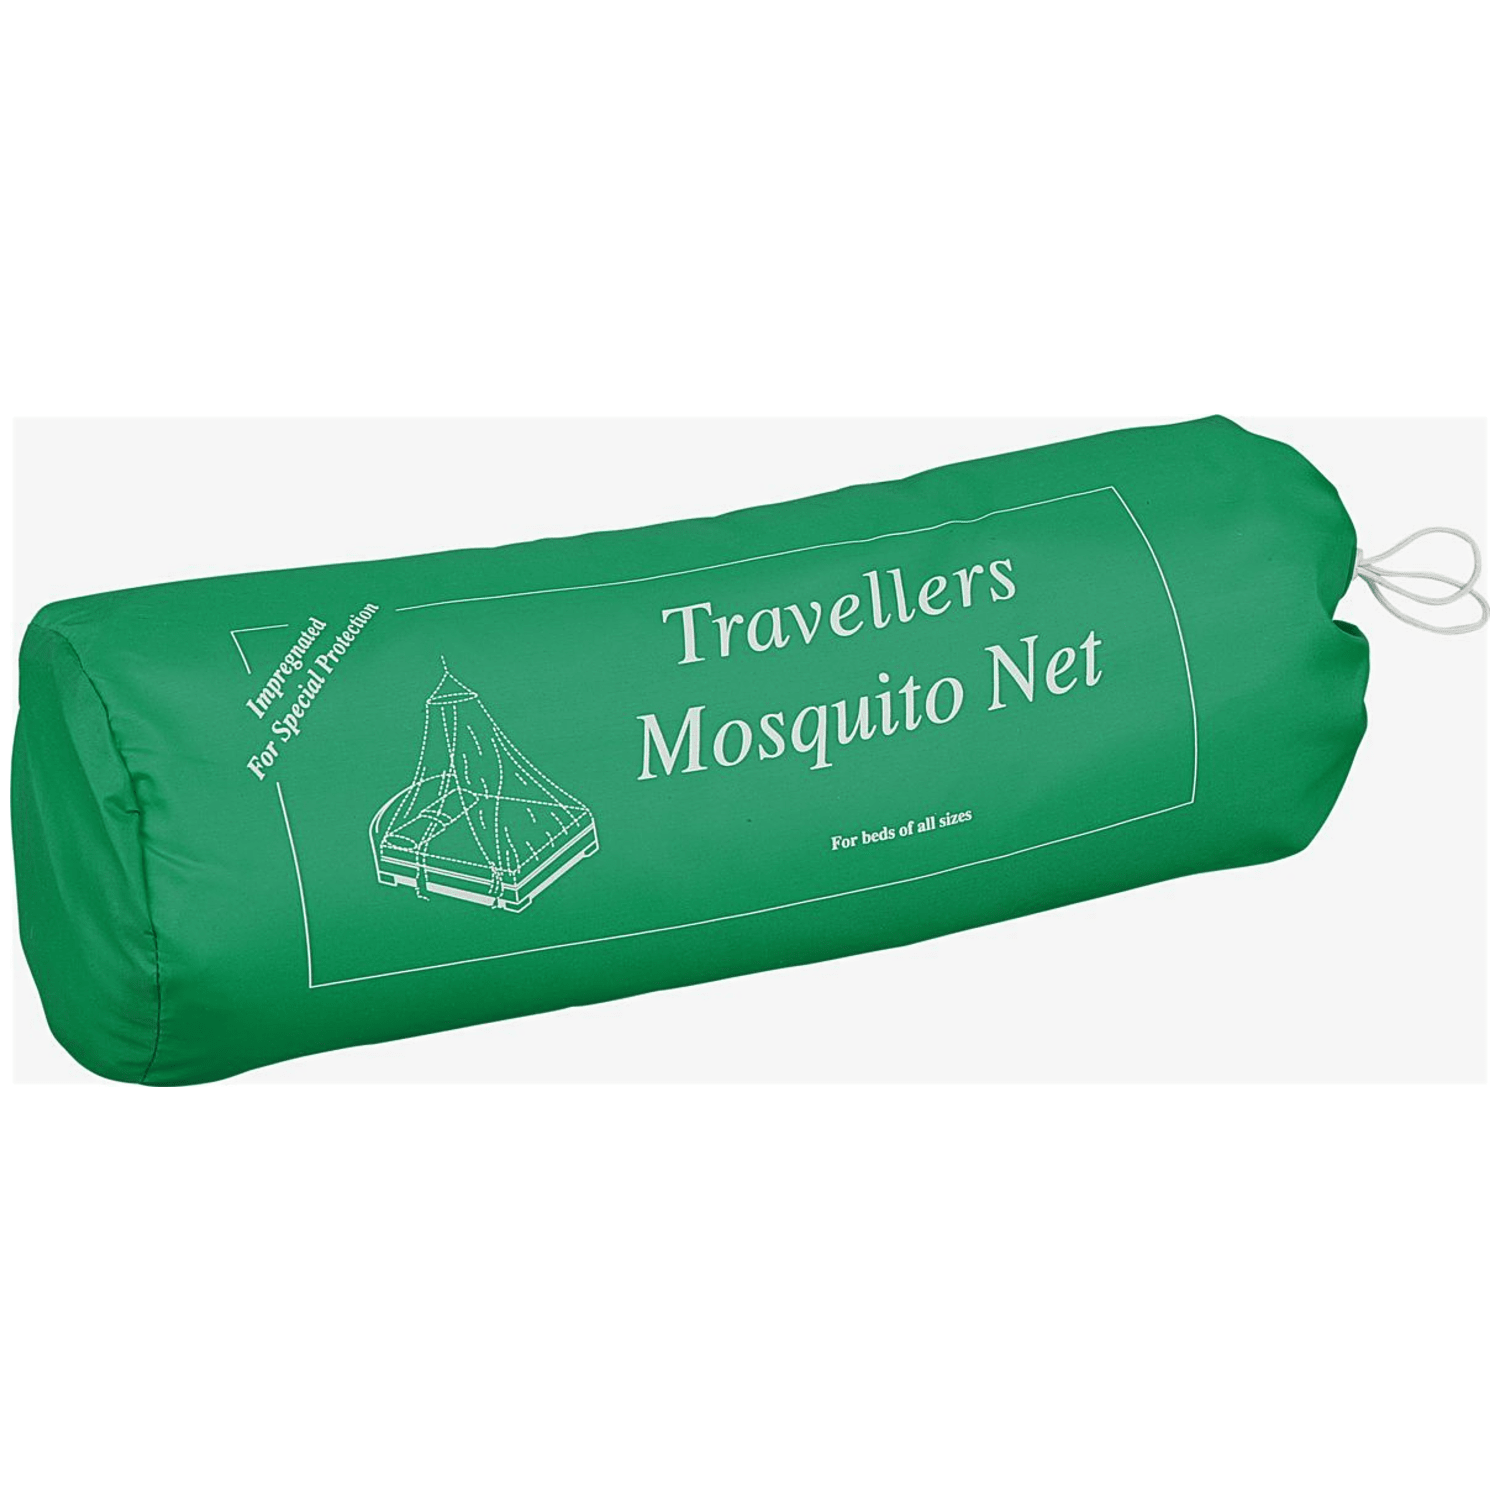 High Colorado Mosquito Net Unisex Moskitonetz